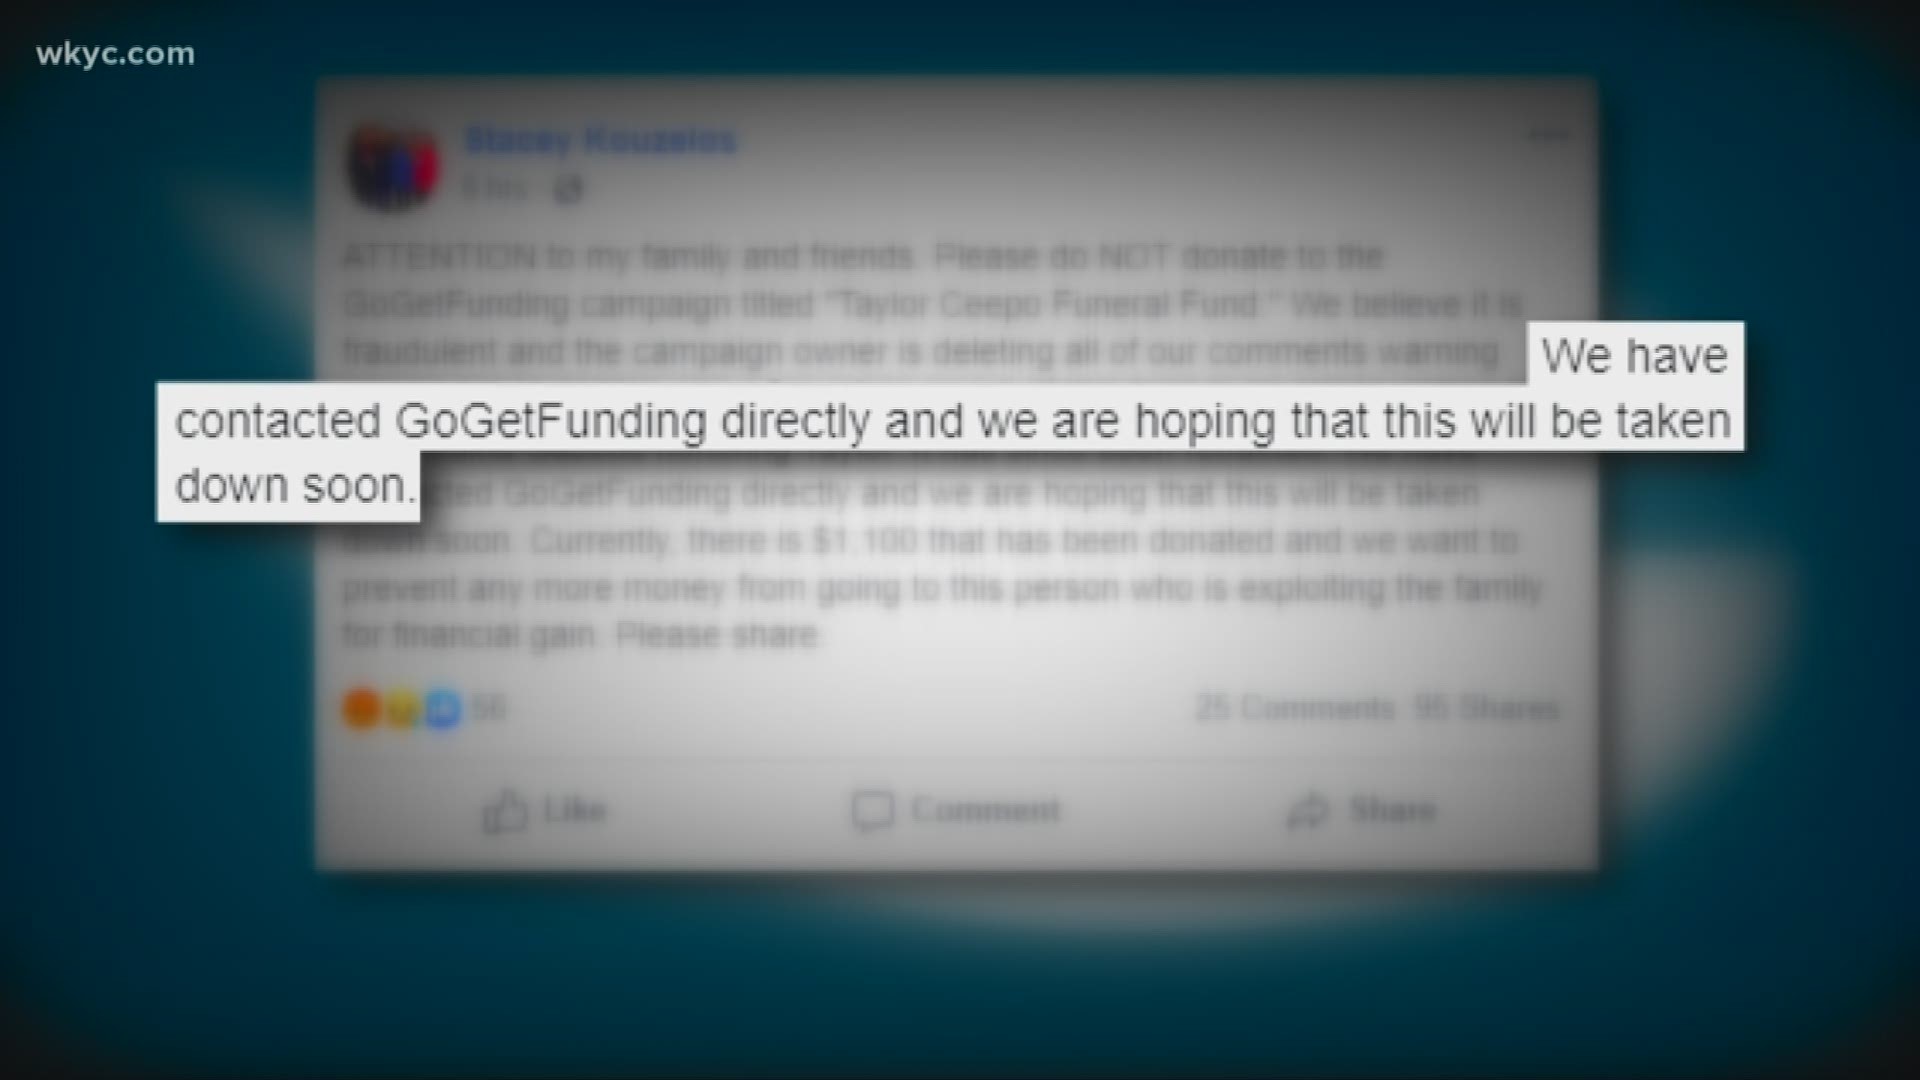 Fake fundraising accounts created for Taylor Ceepo